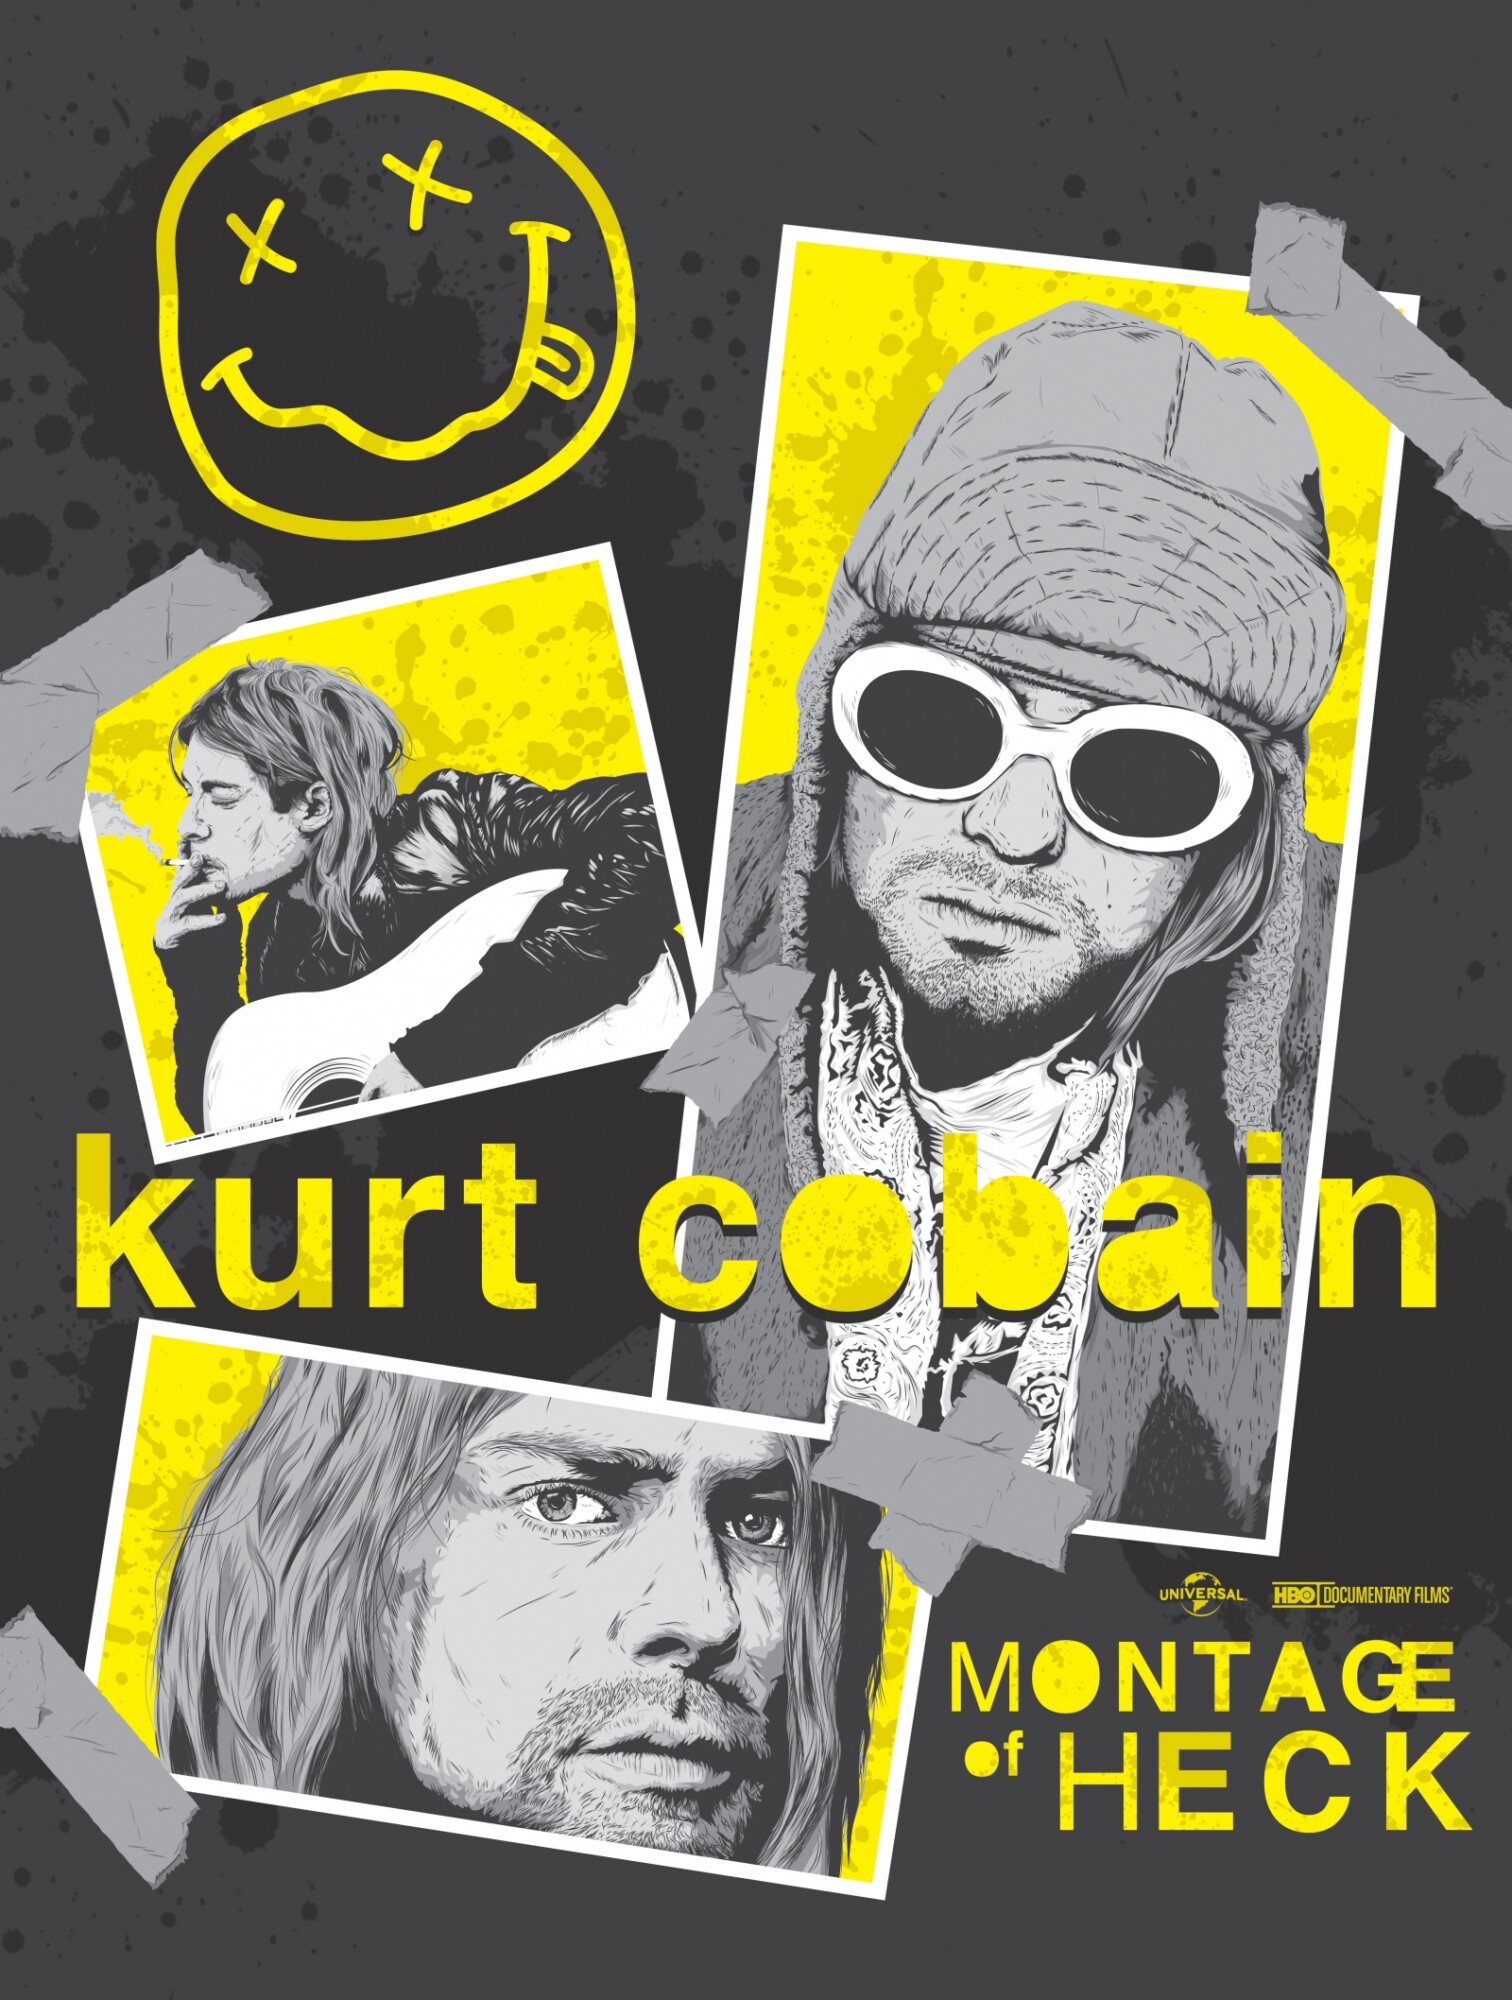 https://posterspy.com/wp-content/uploads/2017/03/Kurt-Cobain-RGB.jpg